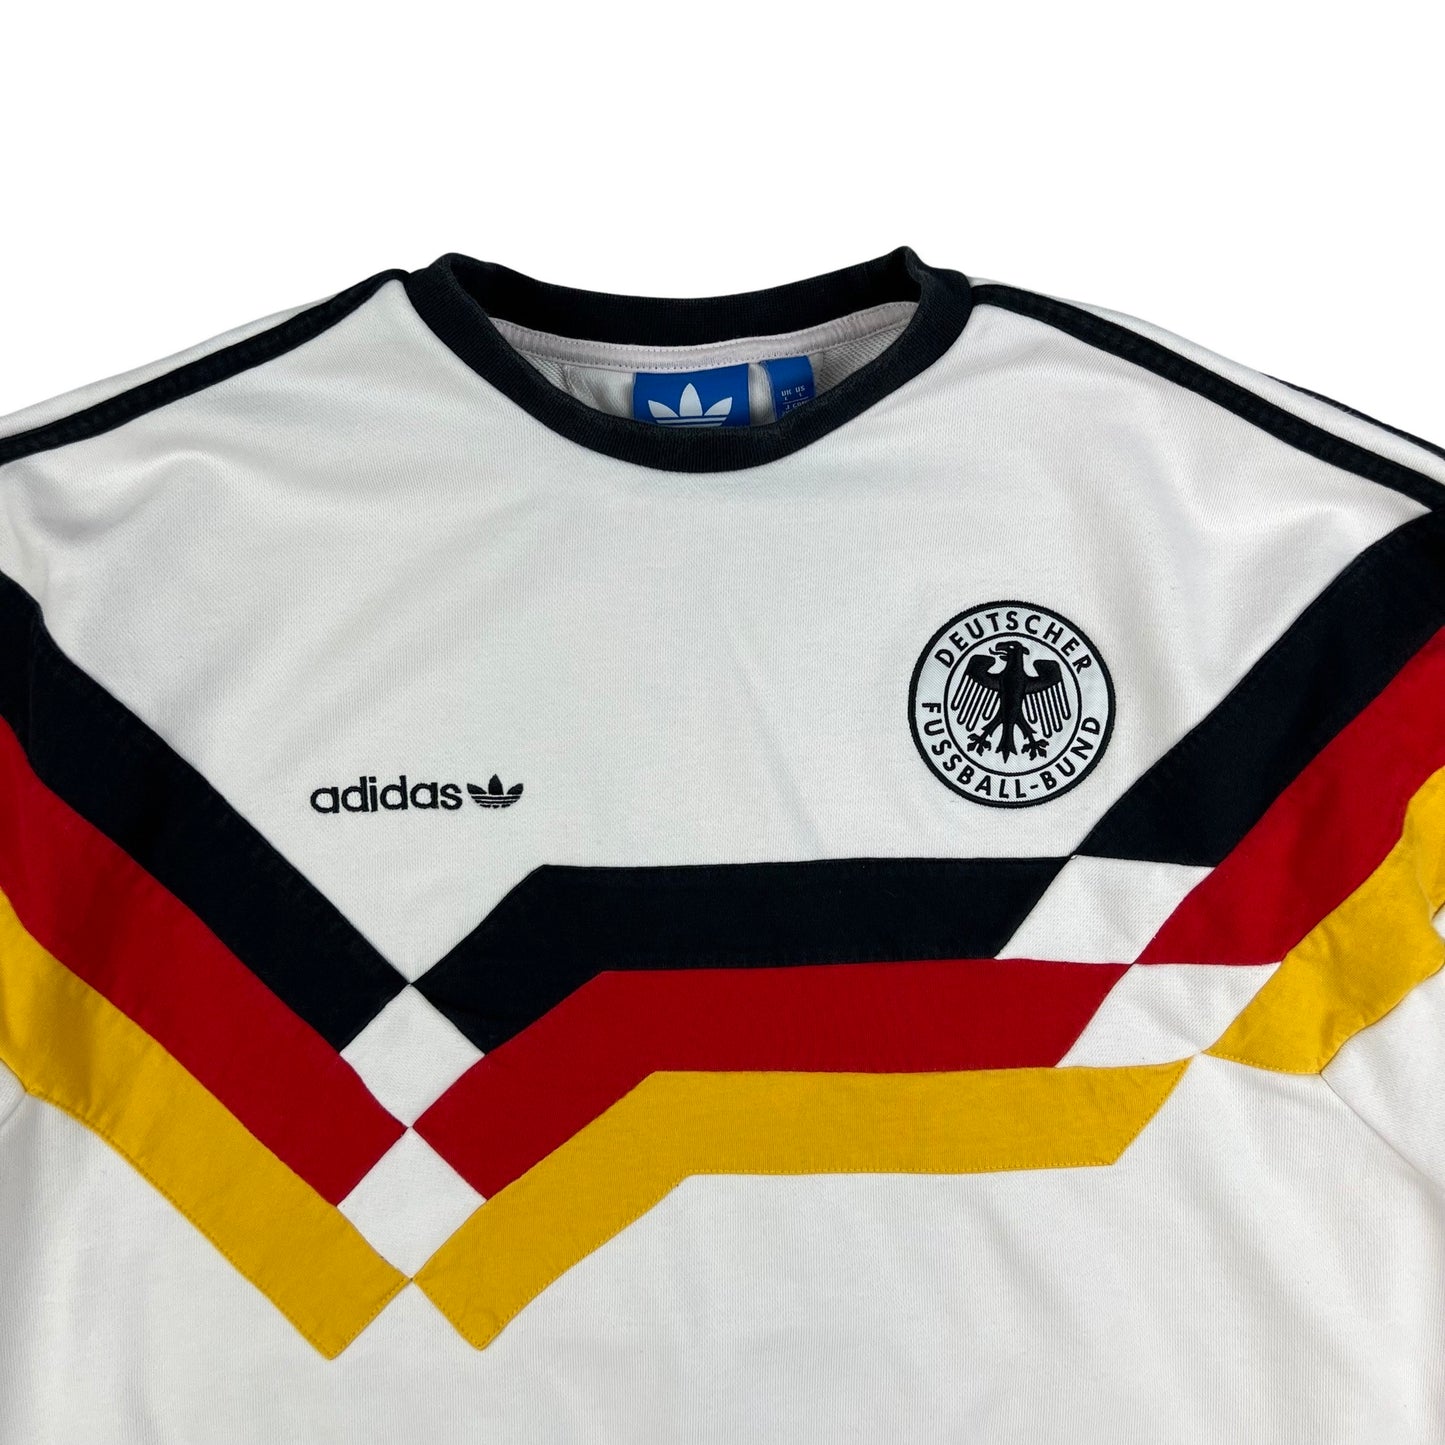 00s Vintage White Adidas German Football Sweatshirt Black Red Yellow Graphic M L XL